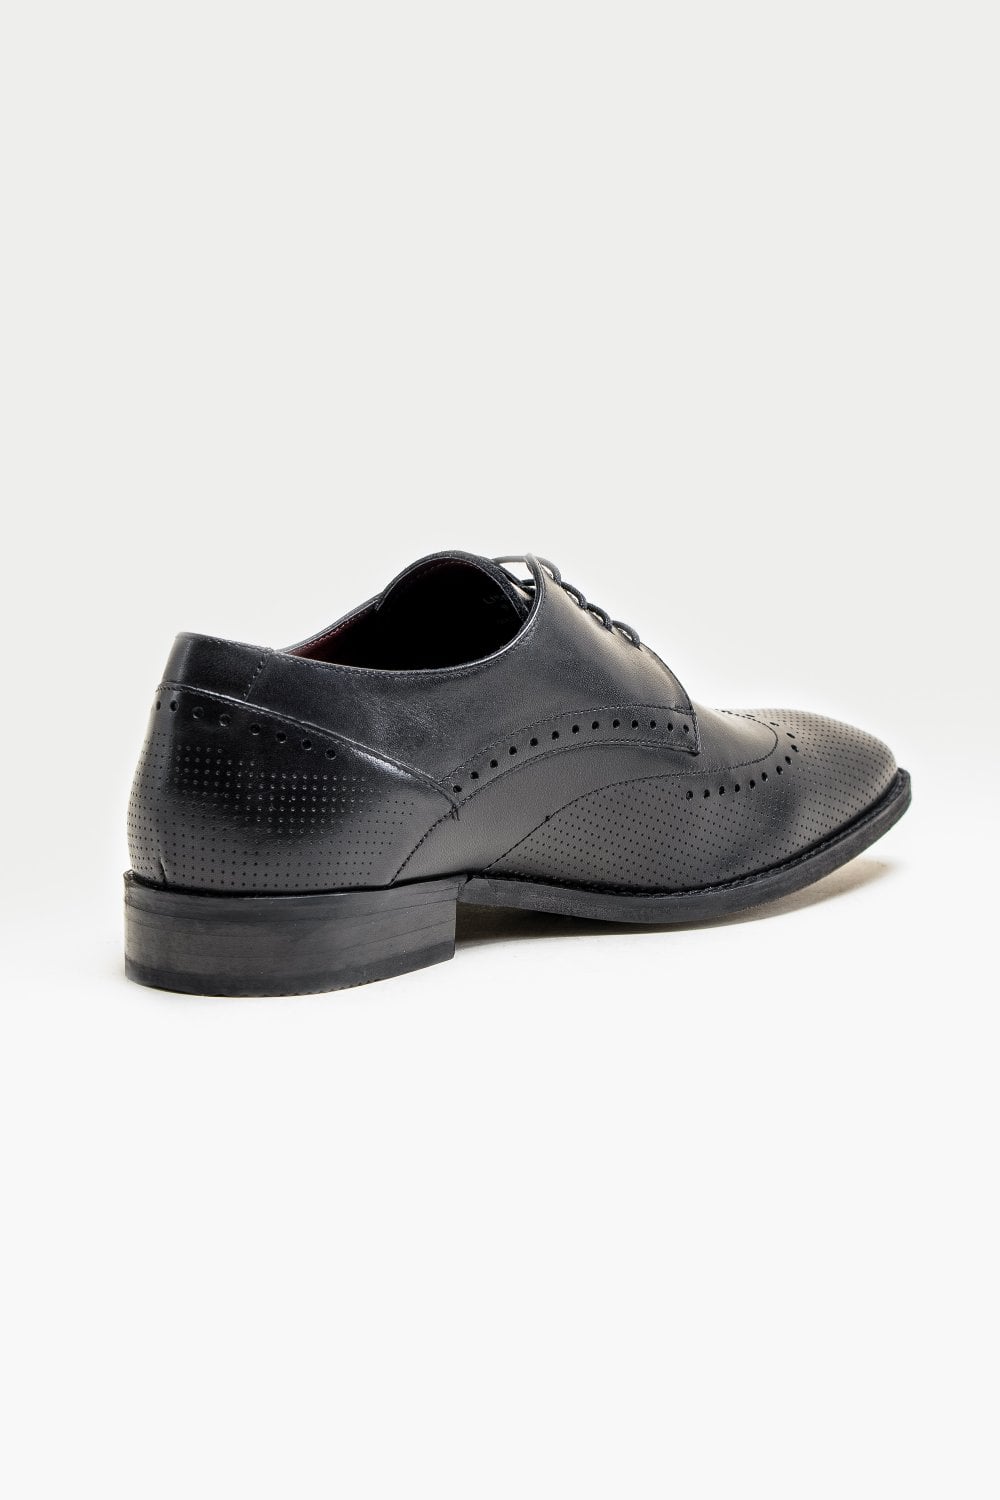 Cavani Lisbon Shoes Black - Wingtip Brogue